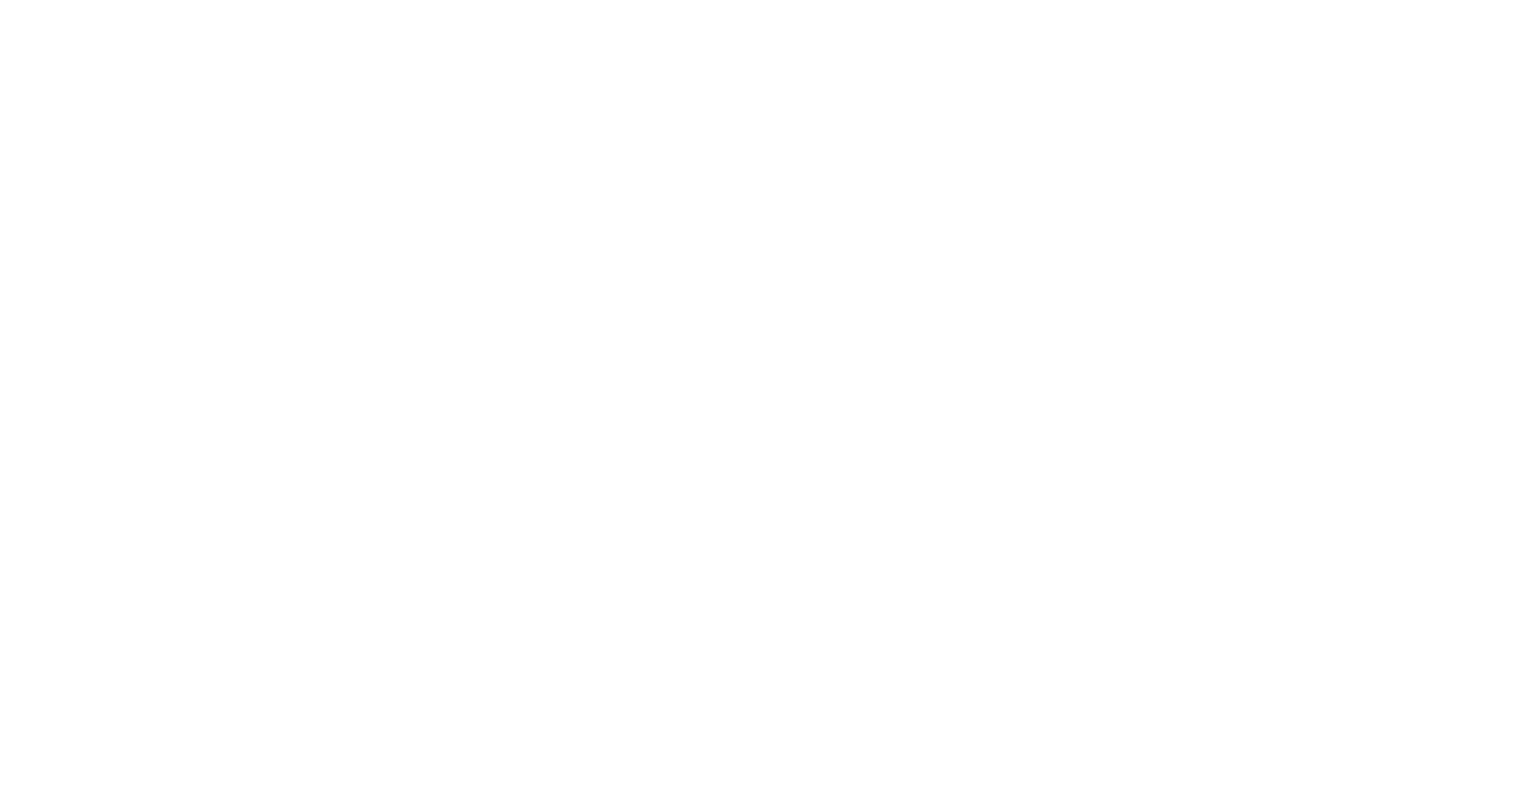 International Bancshares Corp logo large for dark backgrounds (transparent PNG)